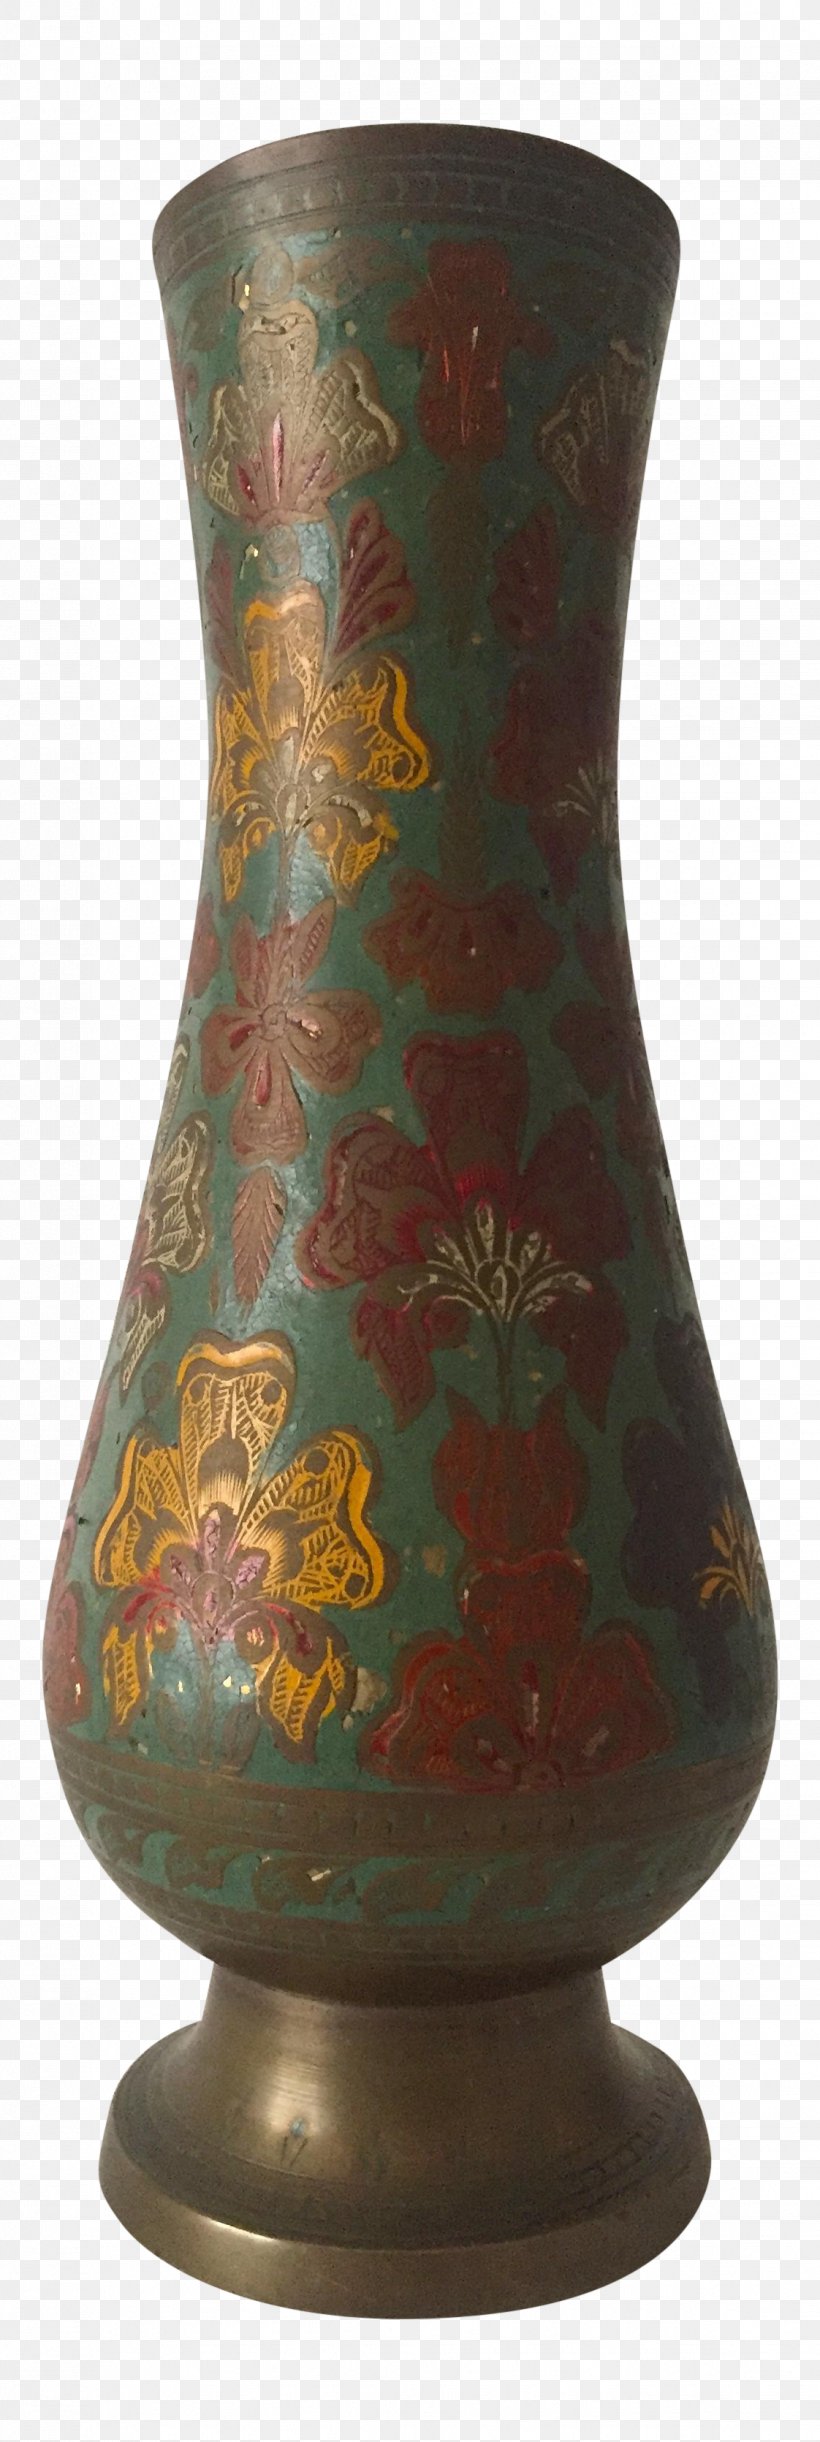 Vase Ceramic Artifact Pottery Urn, PNG, 1122x3342px, Vase, Antique, Artifact, Ceramic, Pottery Download Free